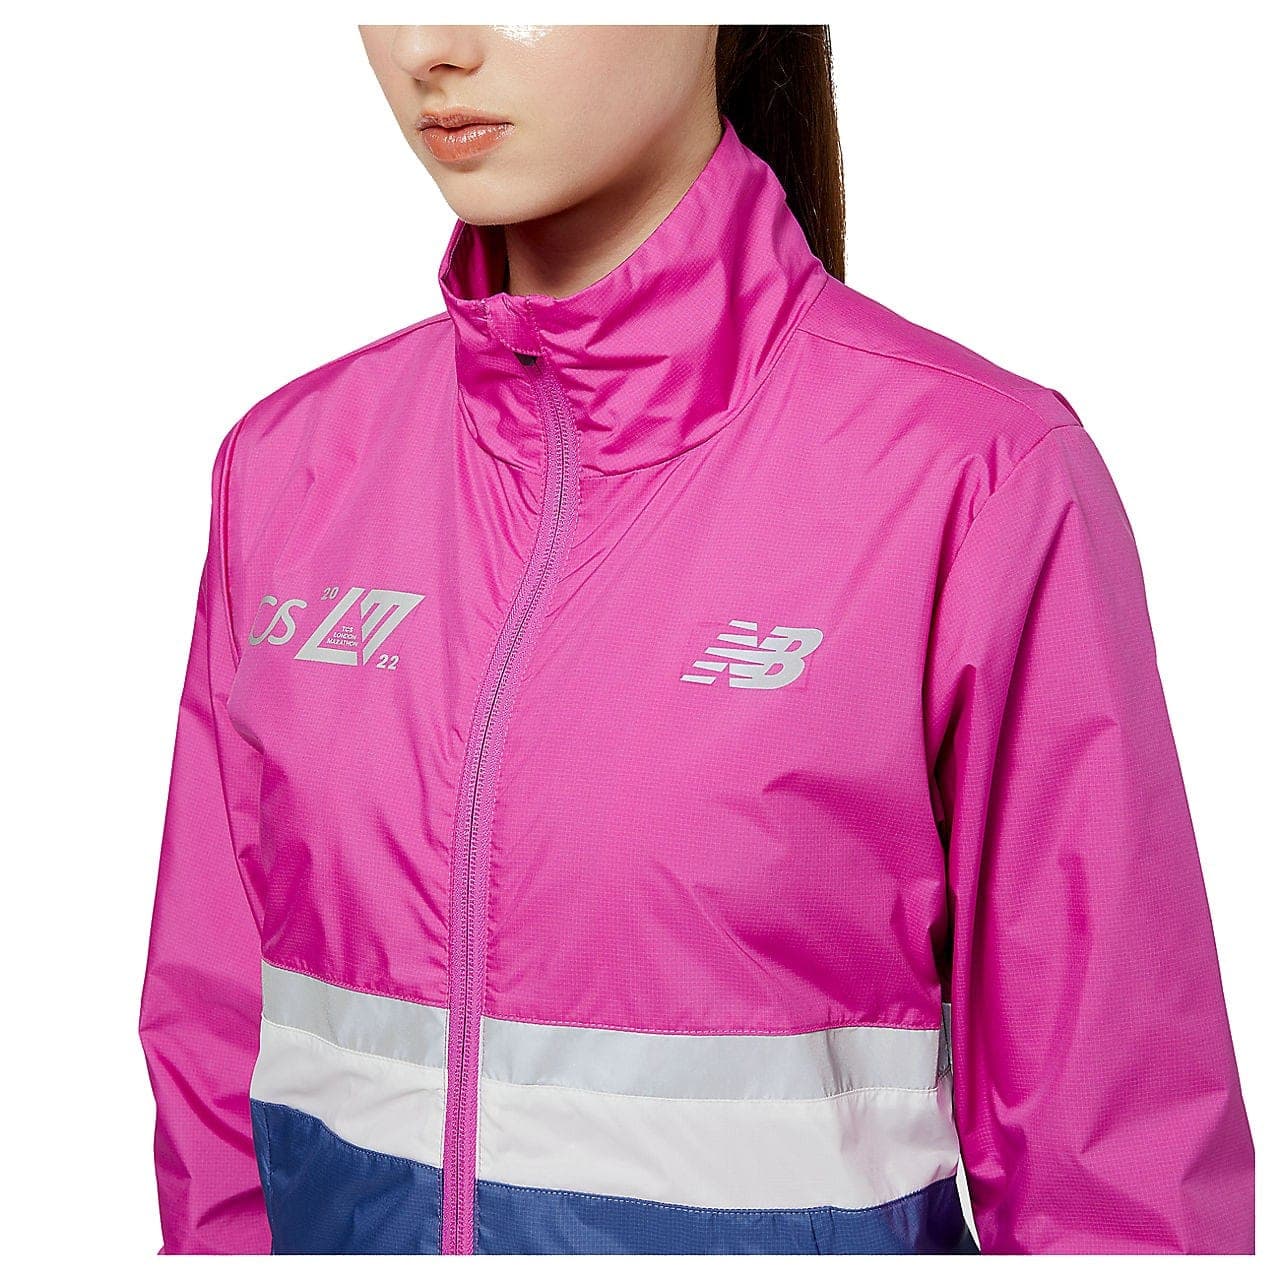 New Balance London Marathon Jacket (Women's) - Magenta pop